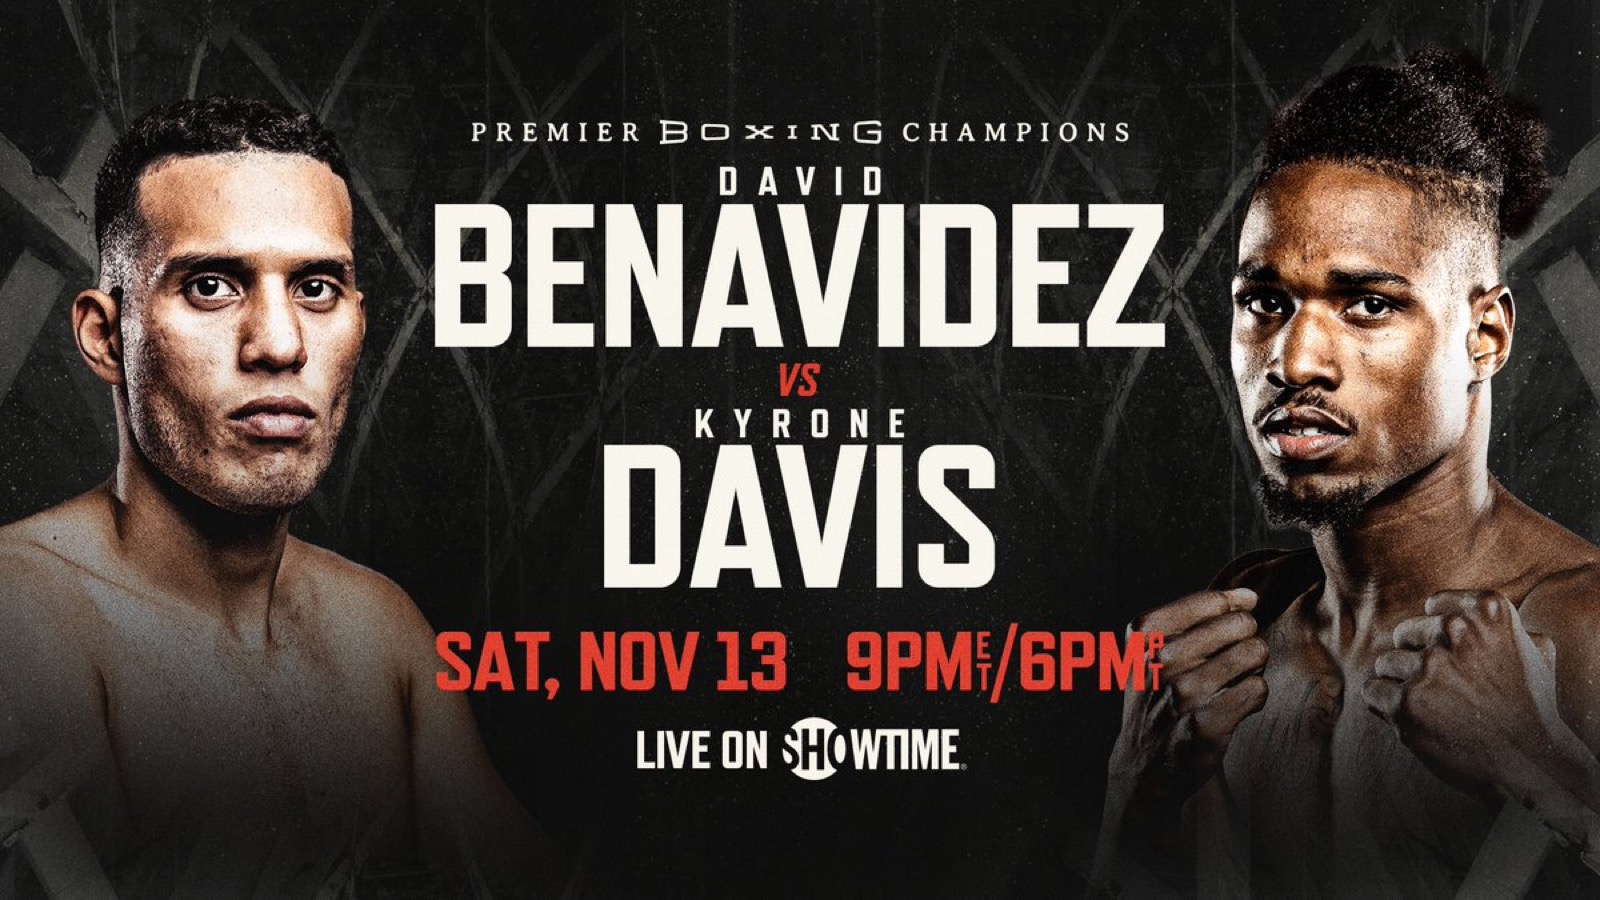 David Benavidez ready for Kyrone Davis on Saturday on Showtime